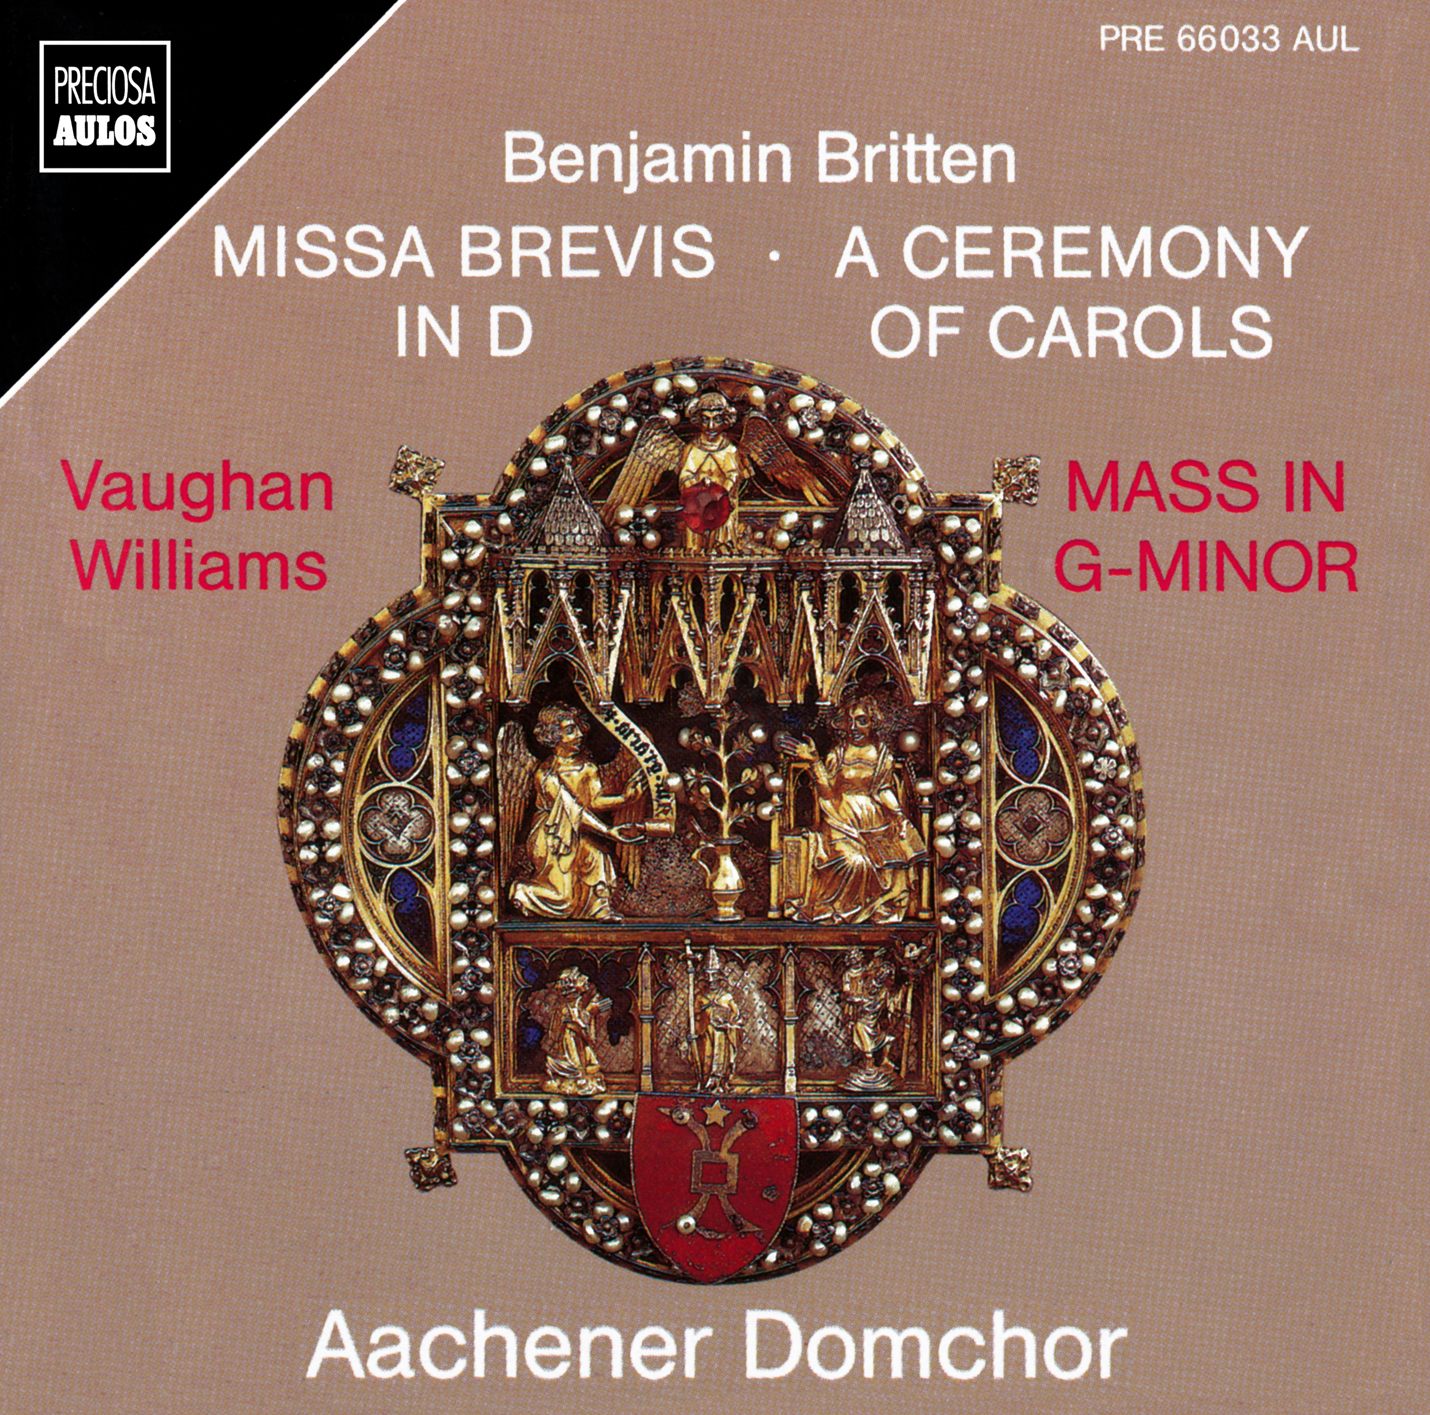 Benjamin Britten - Missa brevis in D